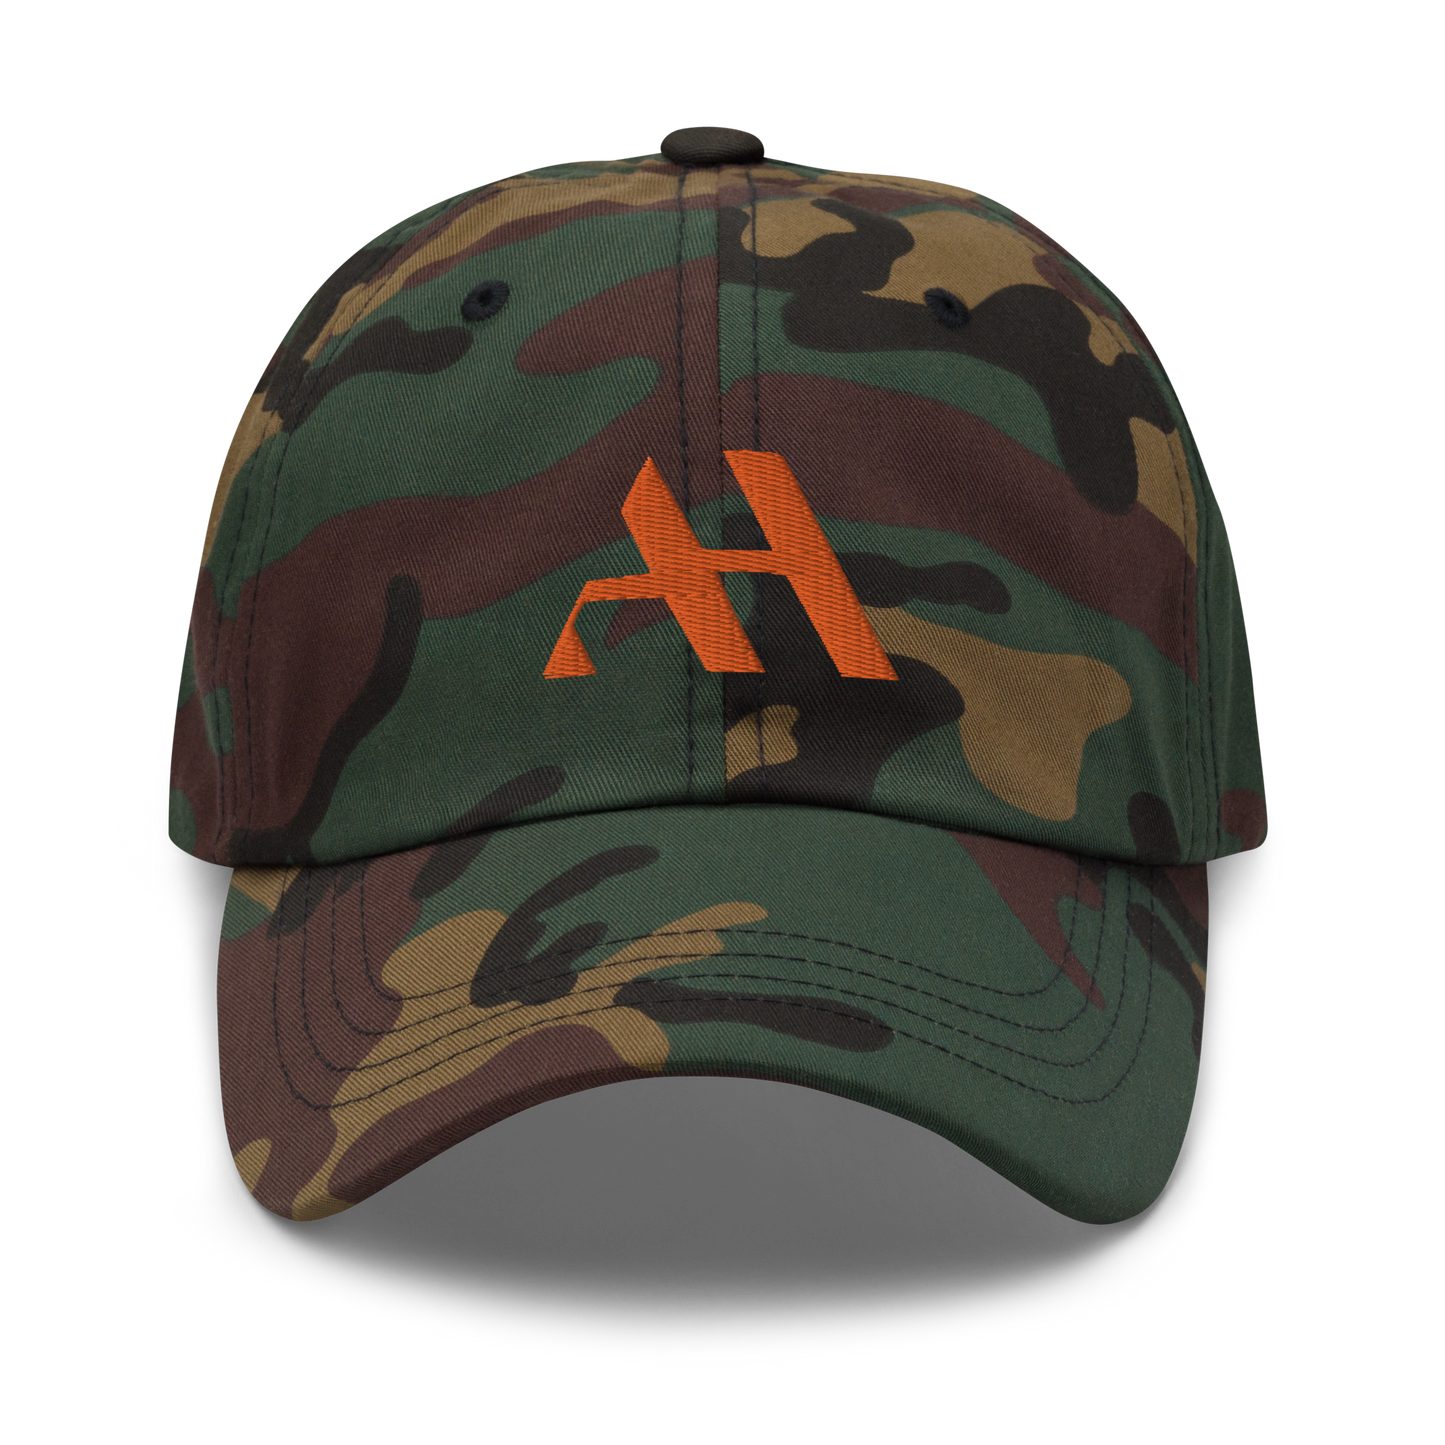 ANTWON HAYDEN PERFORMANCE CAP